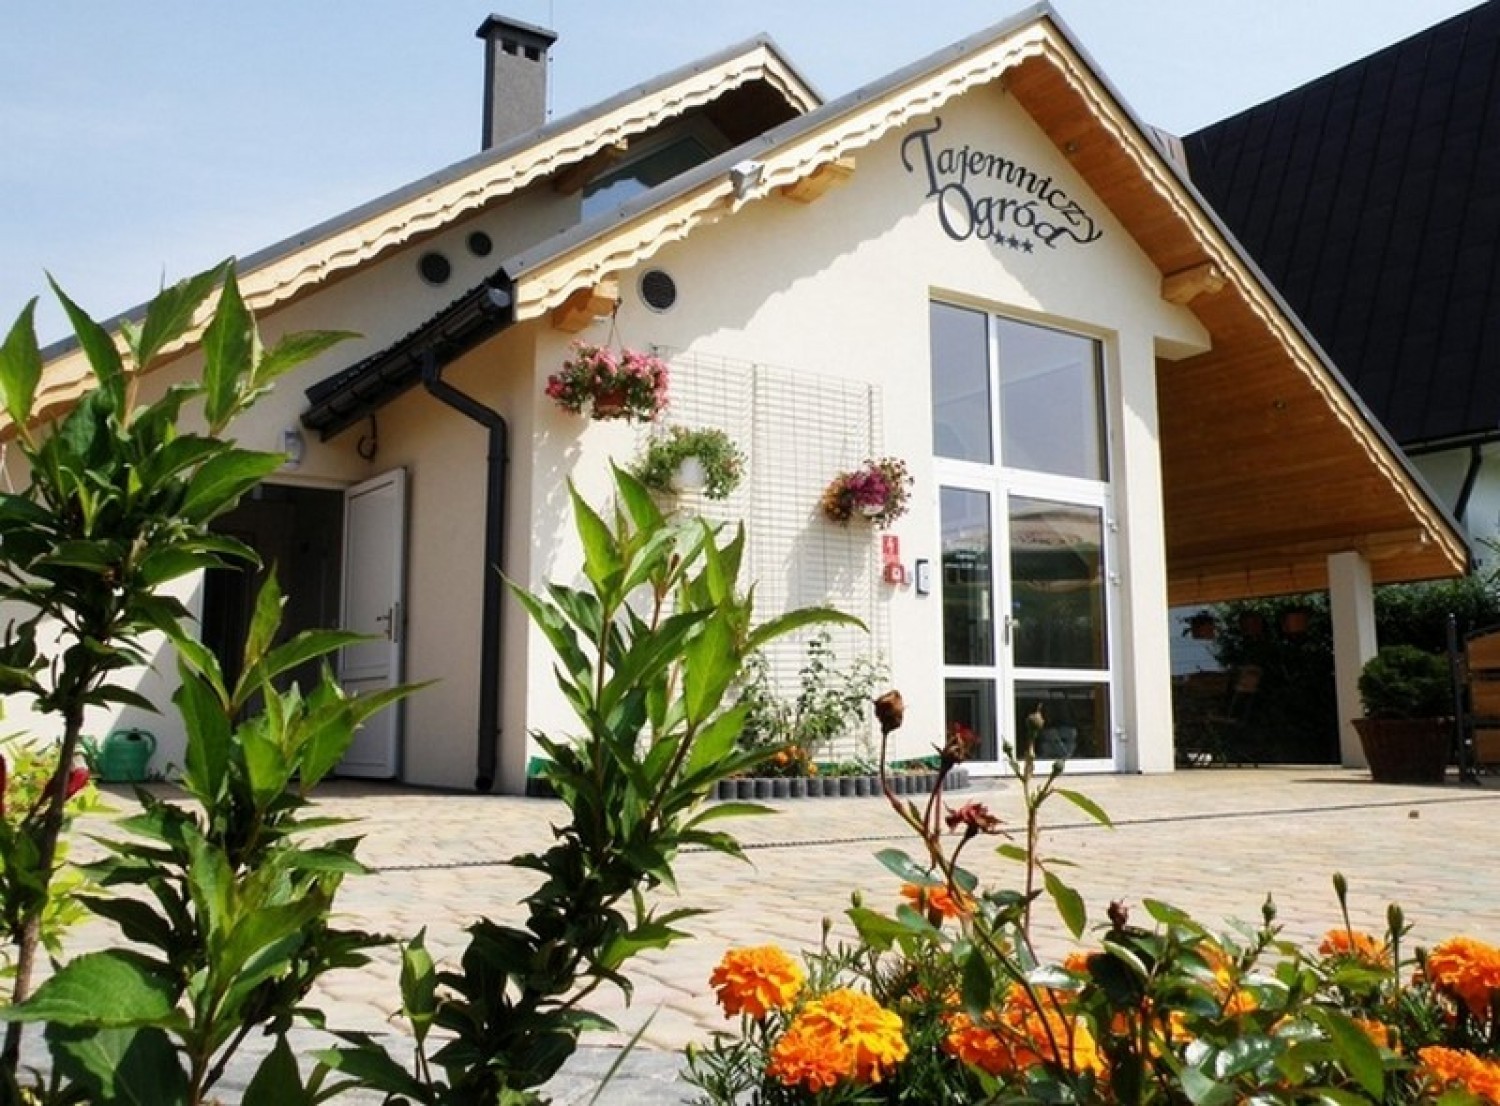 Tajemniczy Ogród Guesthouse and Restaurant